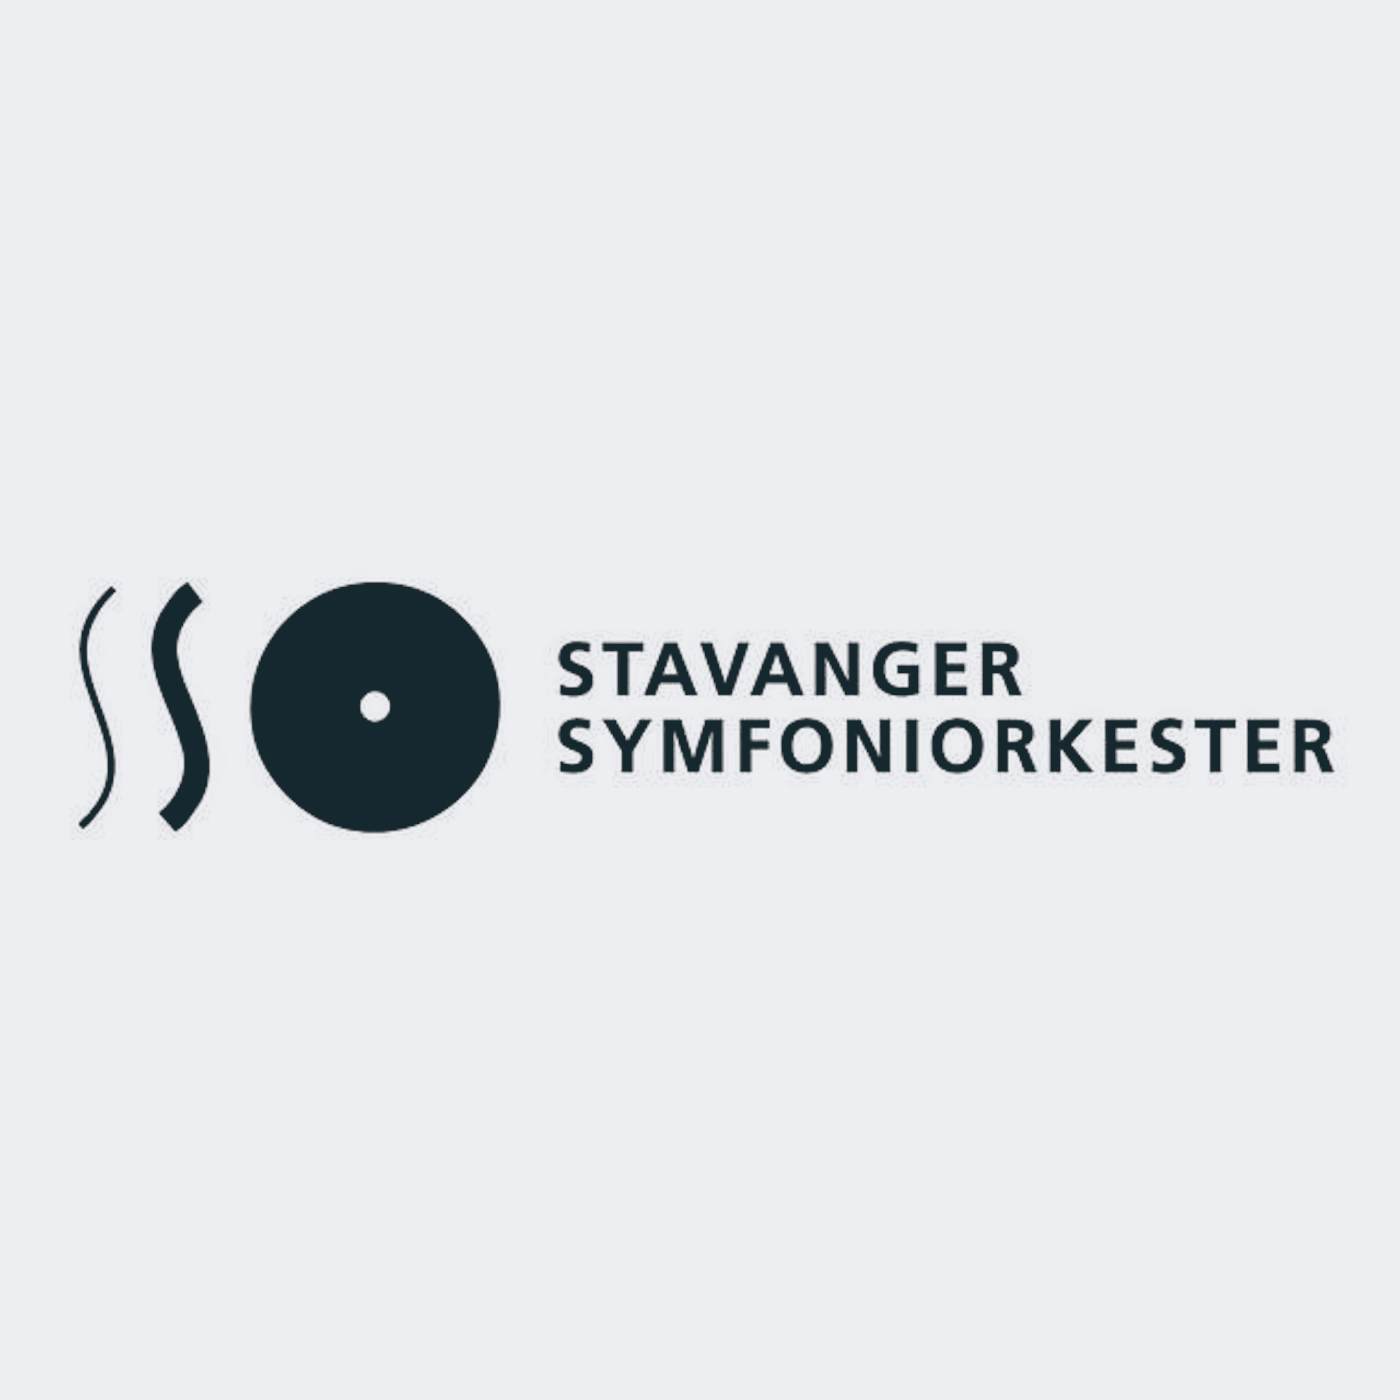 Stavanger Symphony Orchestra